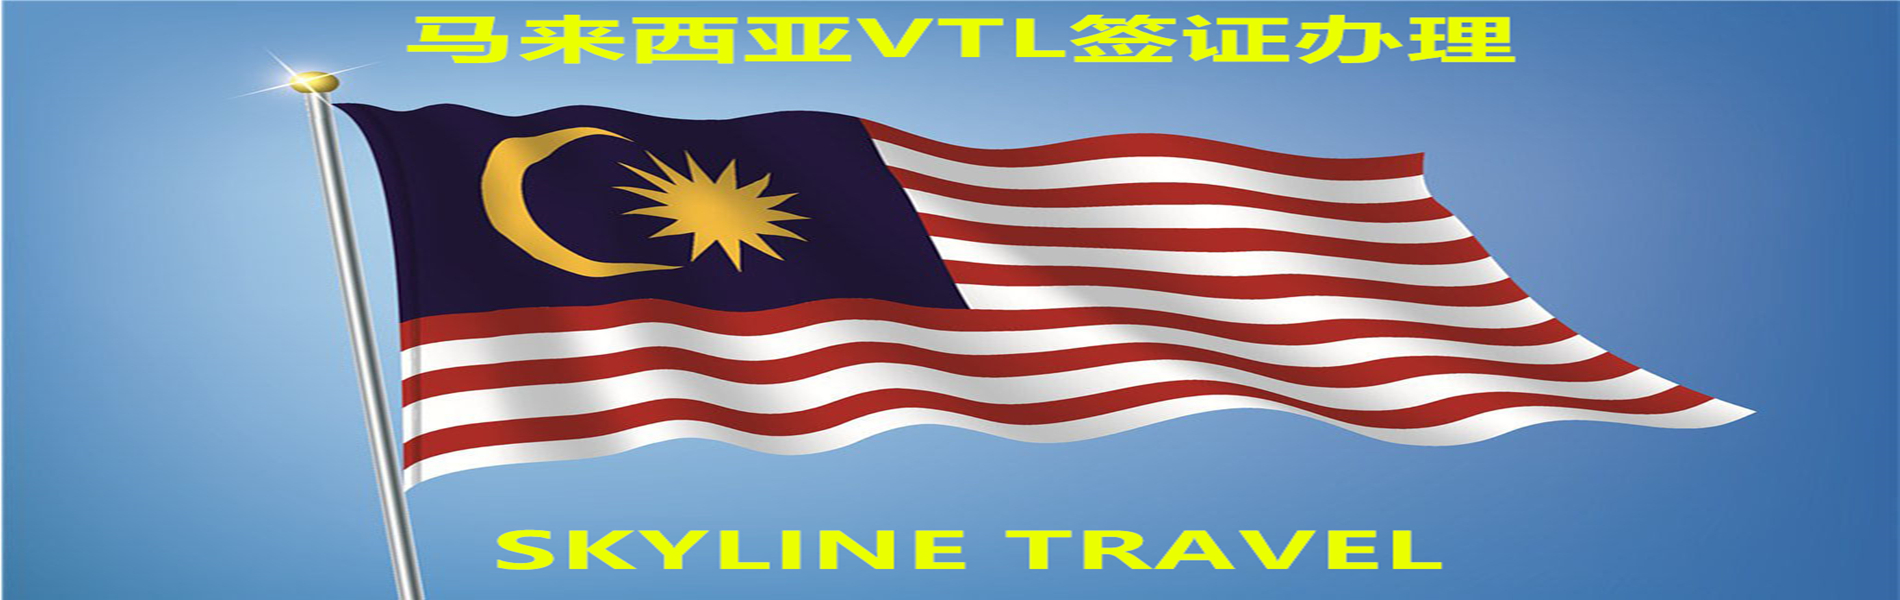 马来西亚签证 MALAYSIA VISA APPLICATION